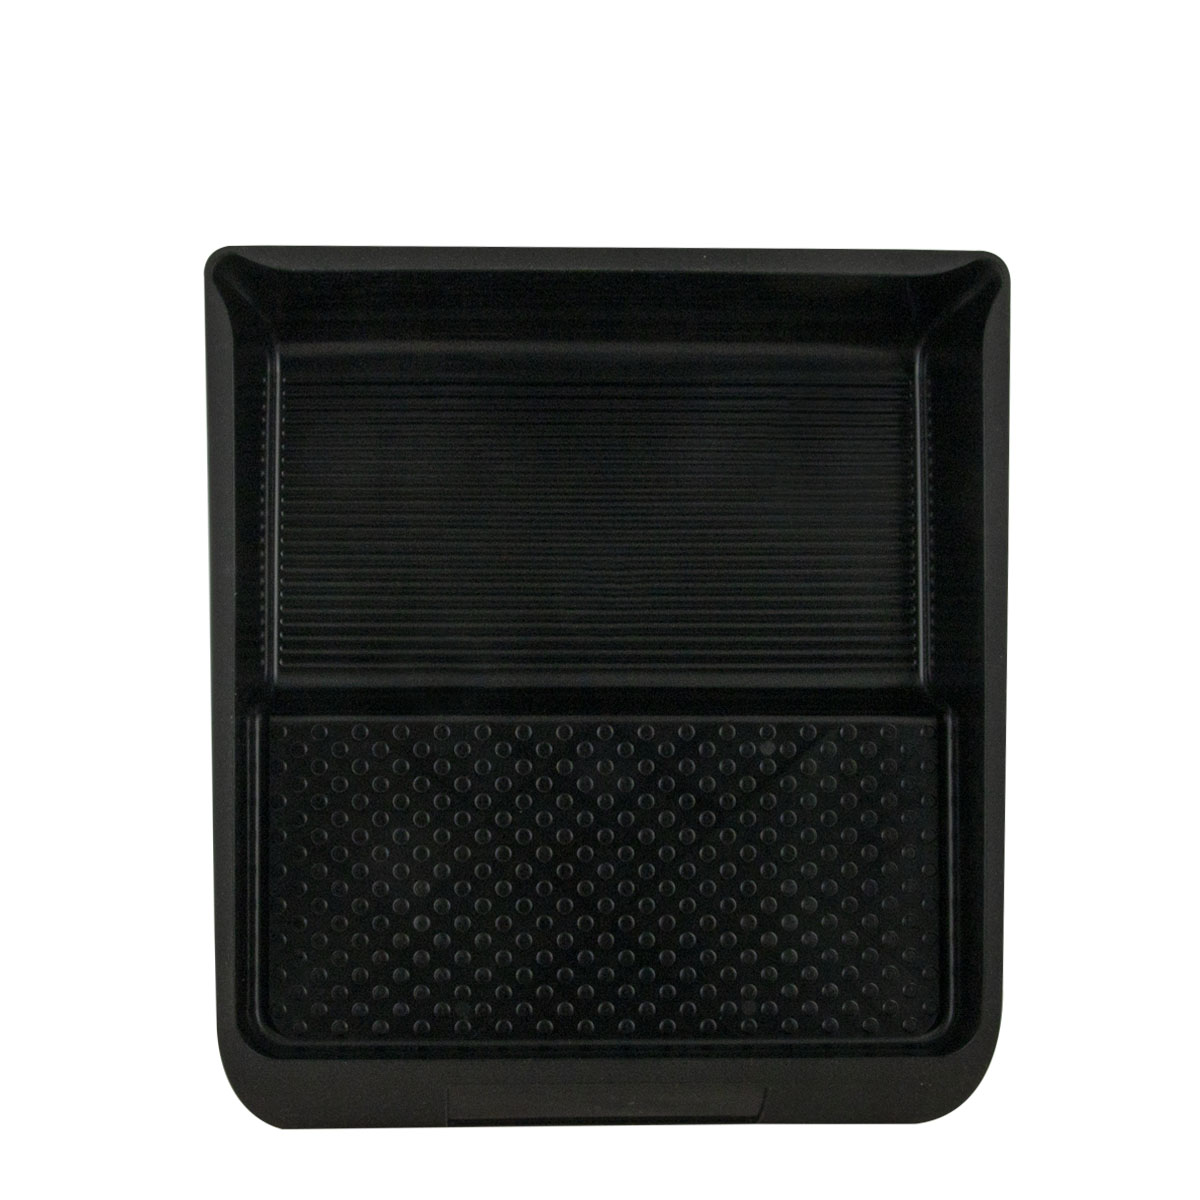 Farbklecks24 Farbwanne Kunststoff, schwarz, Lackwanne, 32 x 36cm